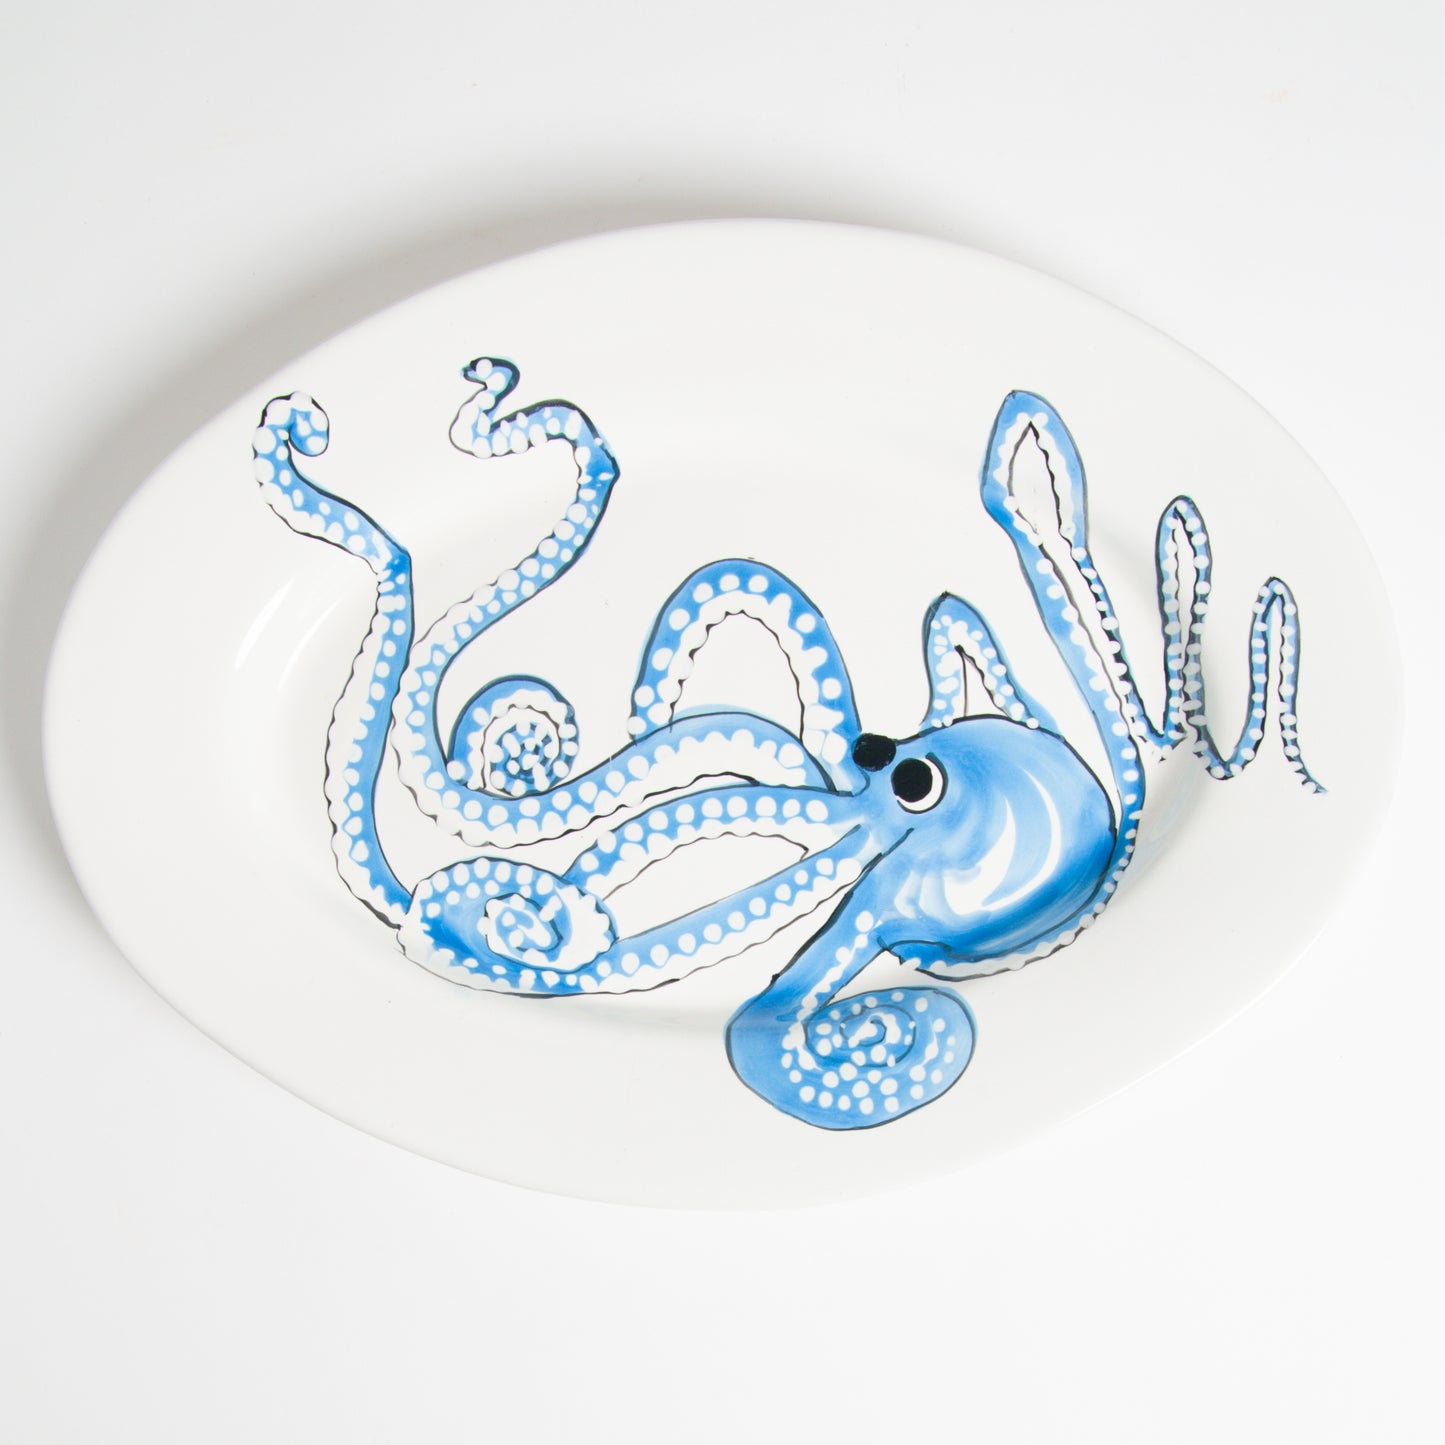 Octopus oval tray